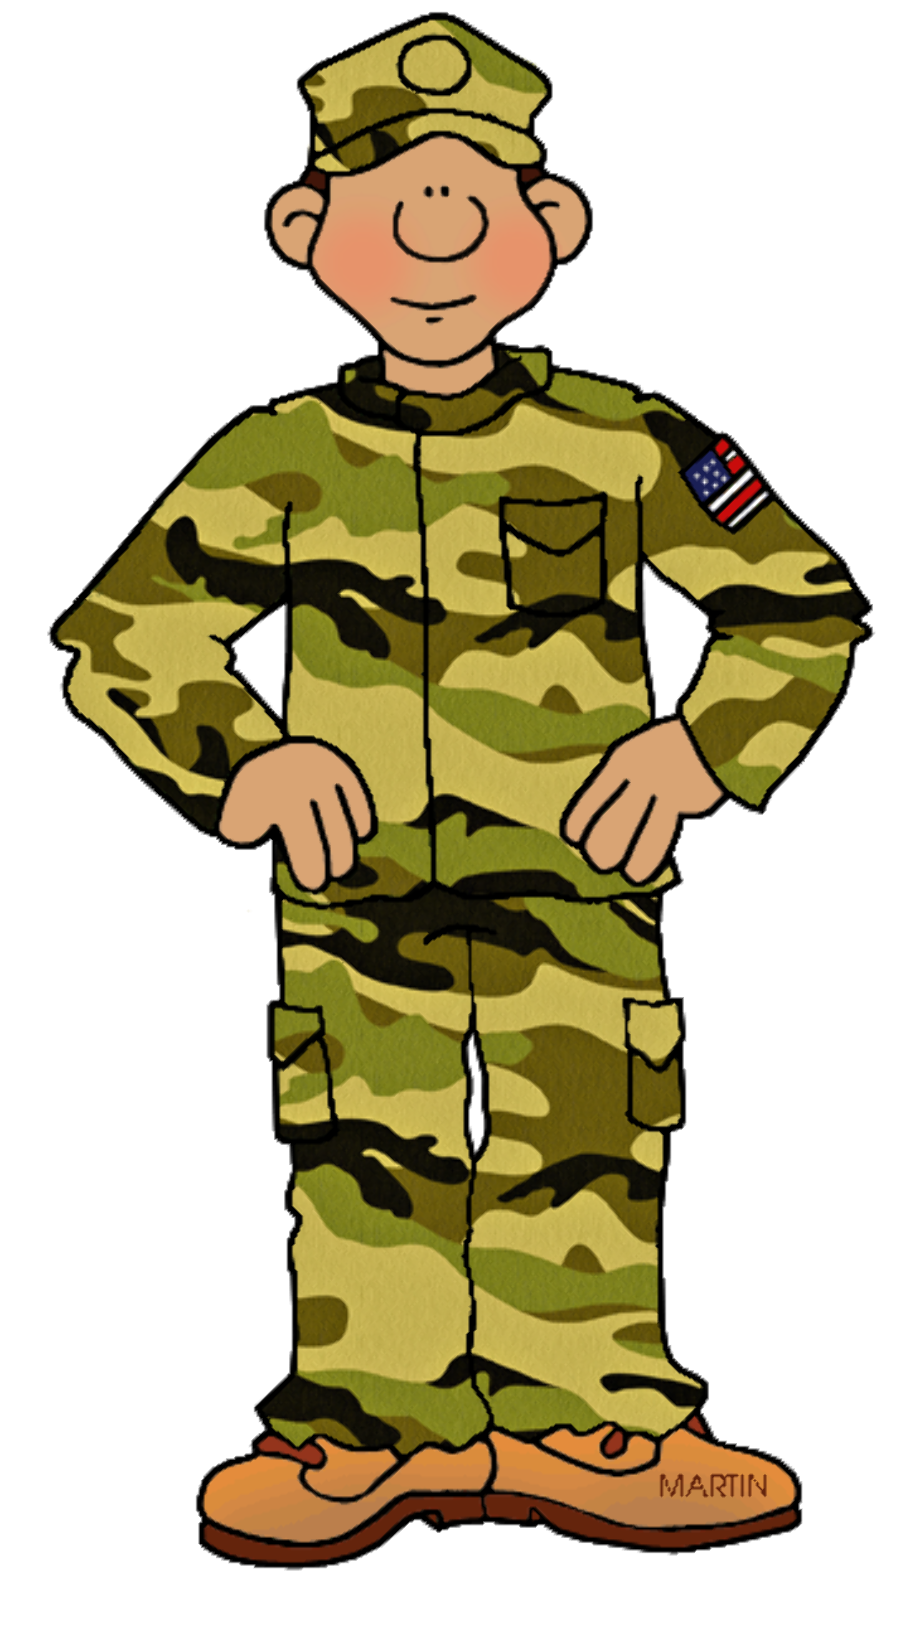 Army Uniform Clipart Army Military